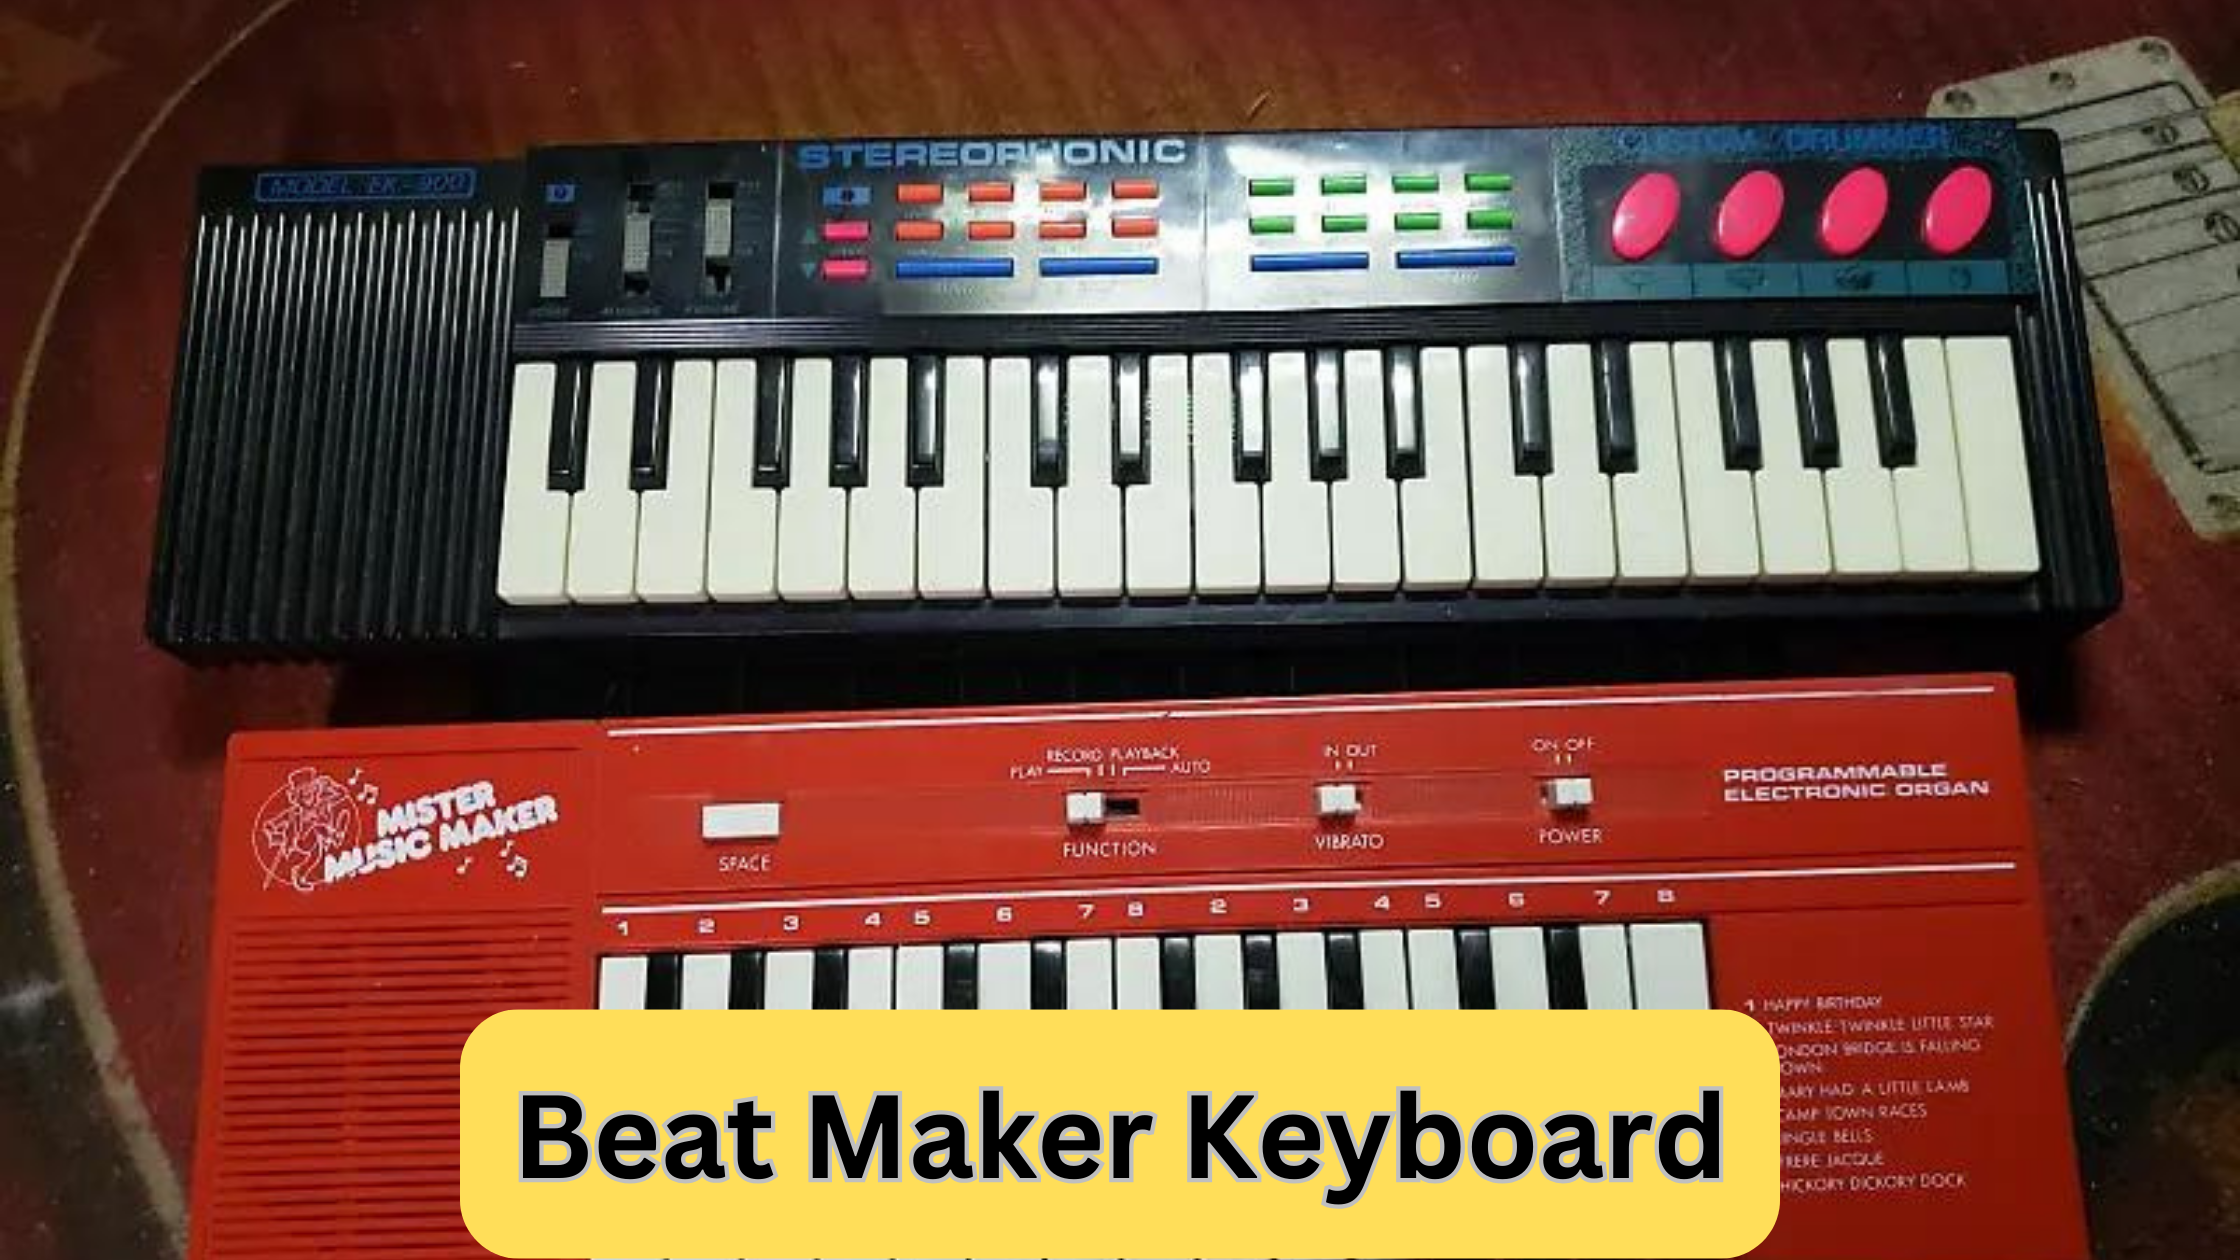 Beat maker keyboard